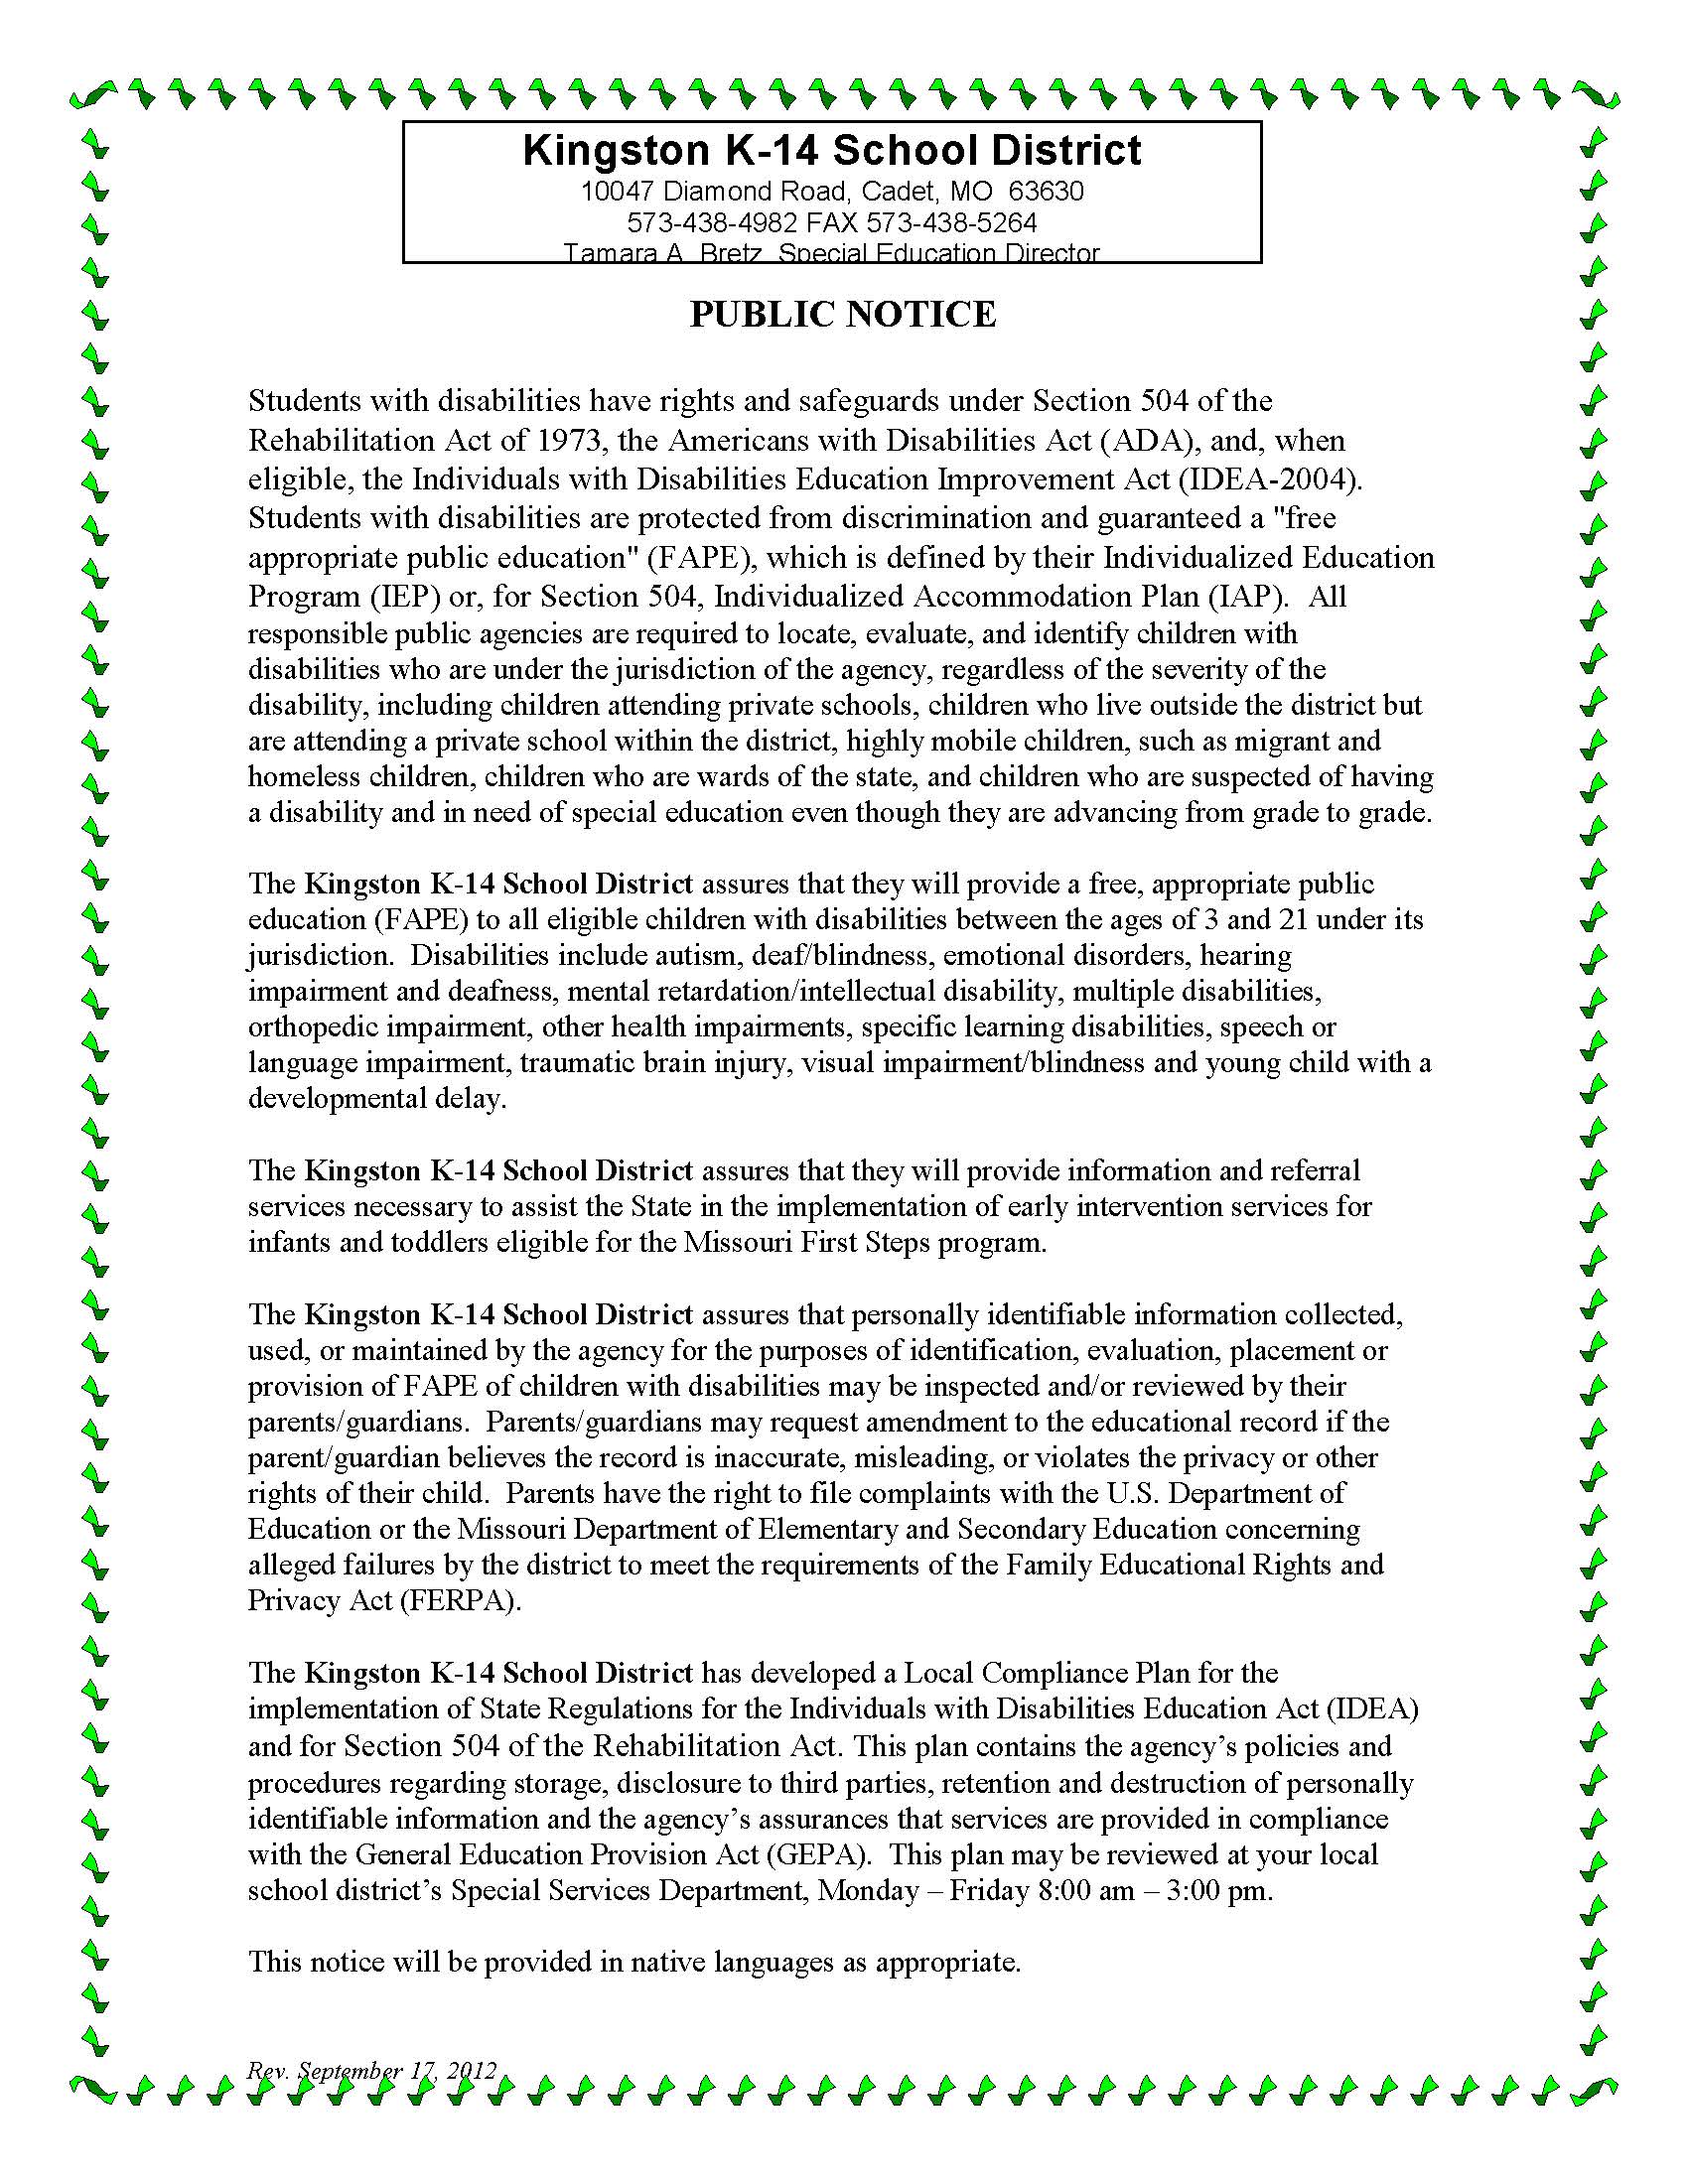 public notice document - kingston k-14